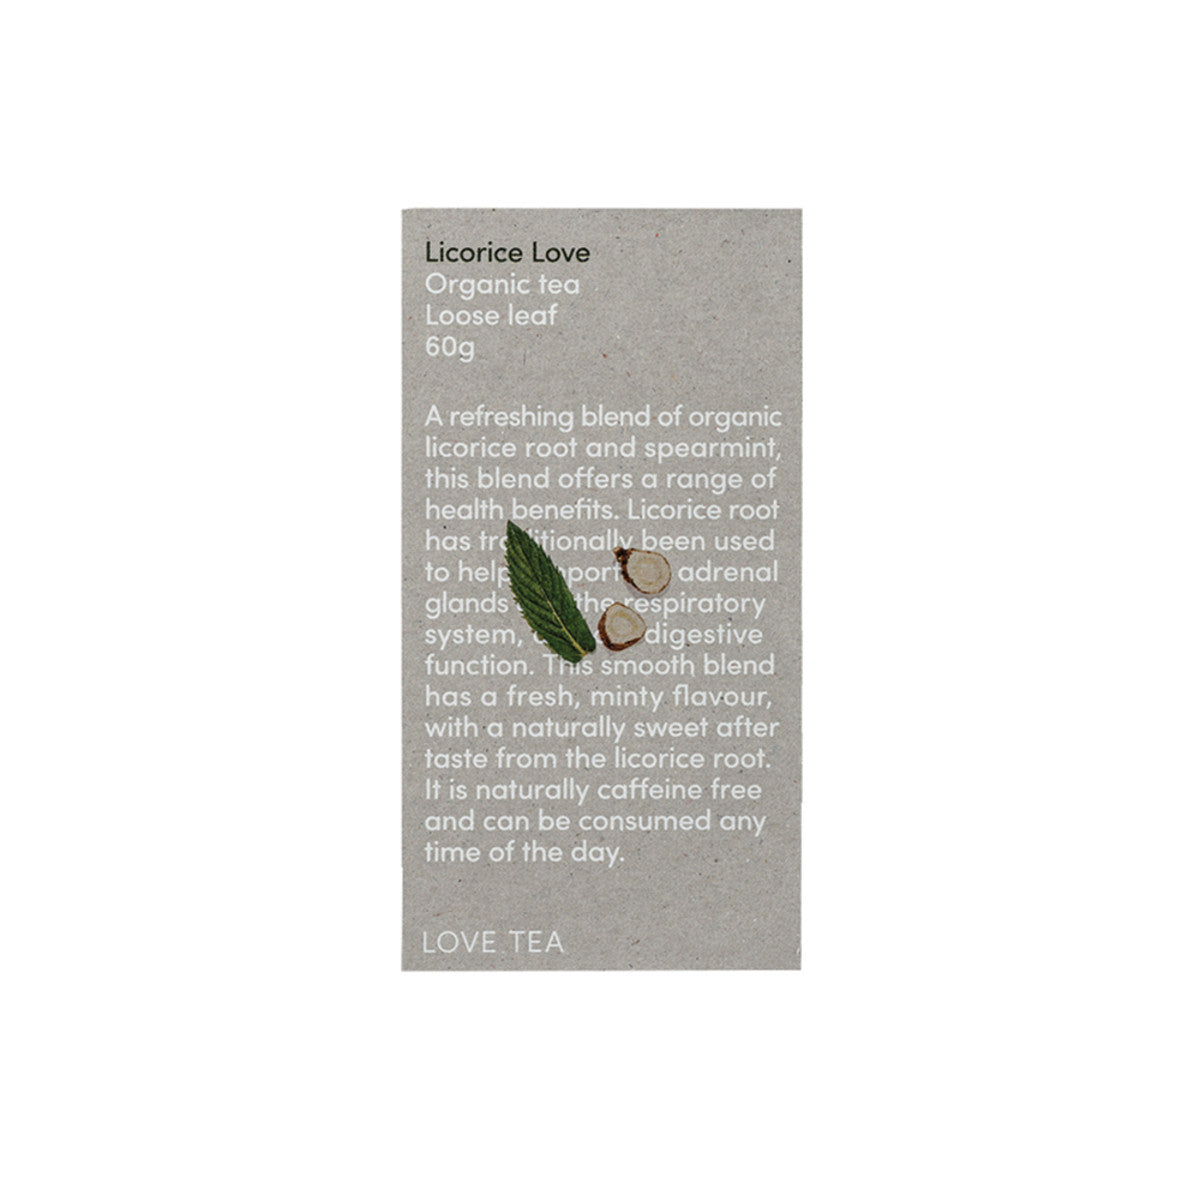 Love Tea - Organic Licorice Love Loose Leaf